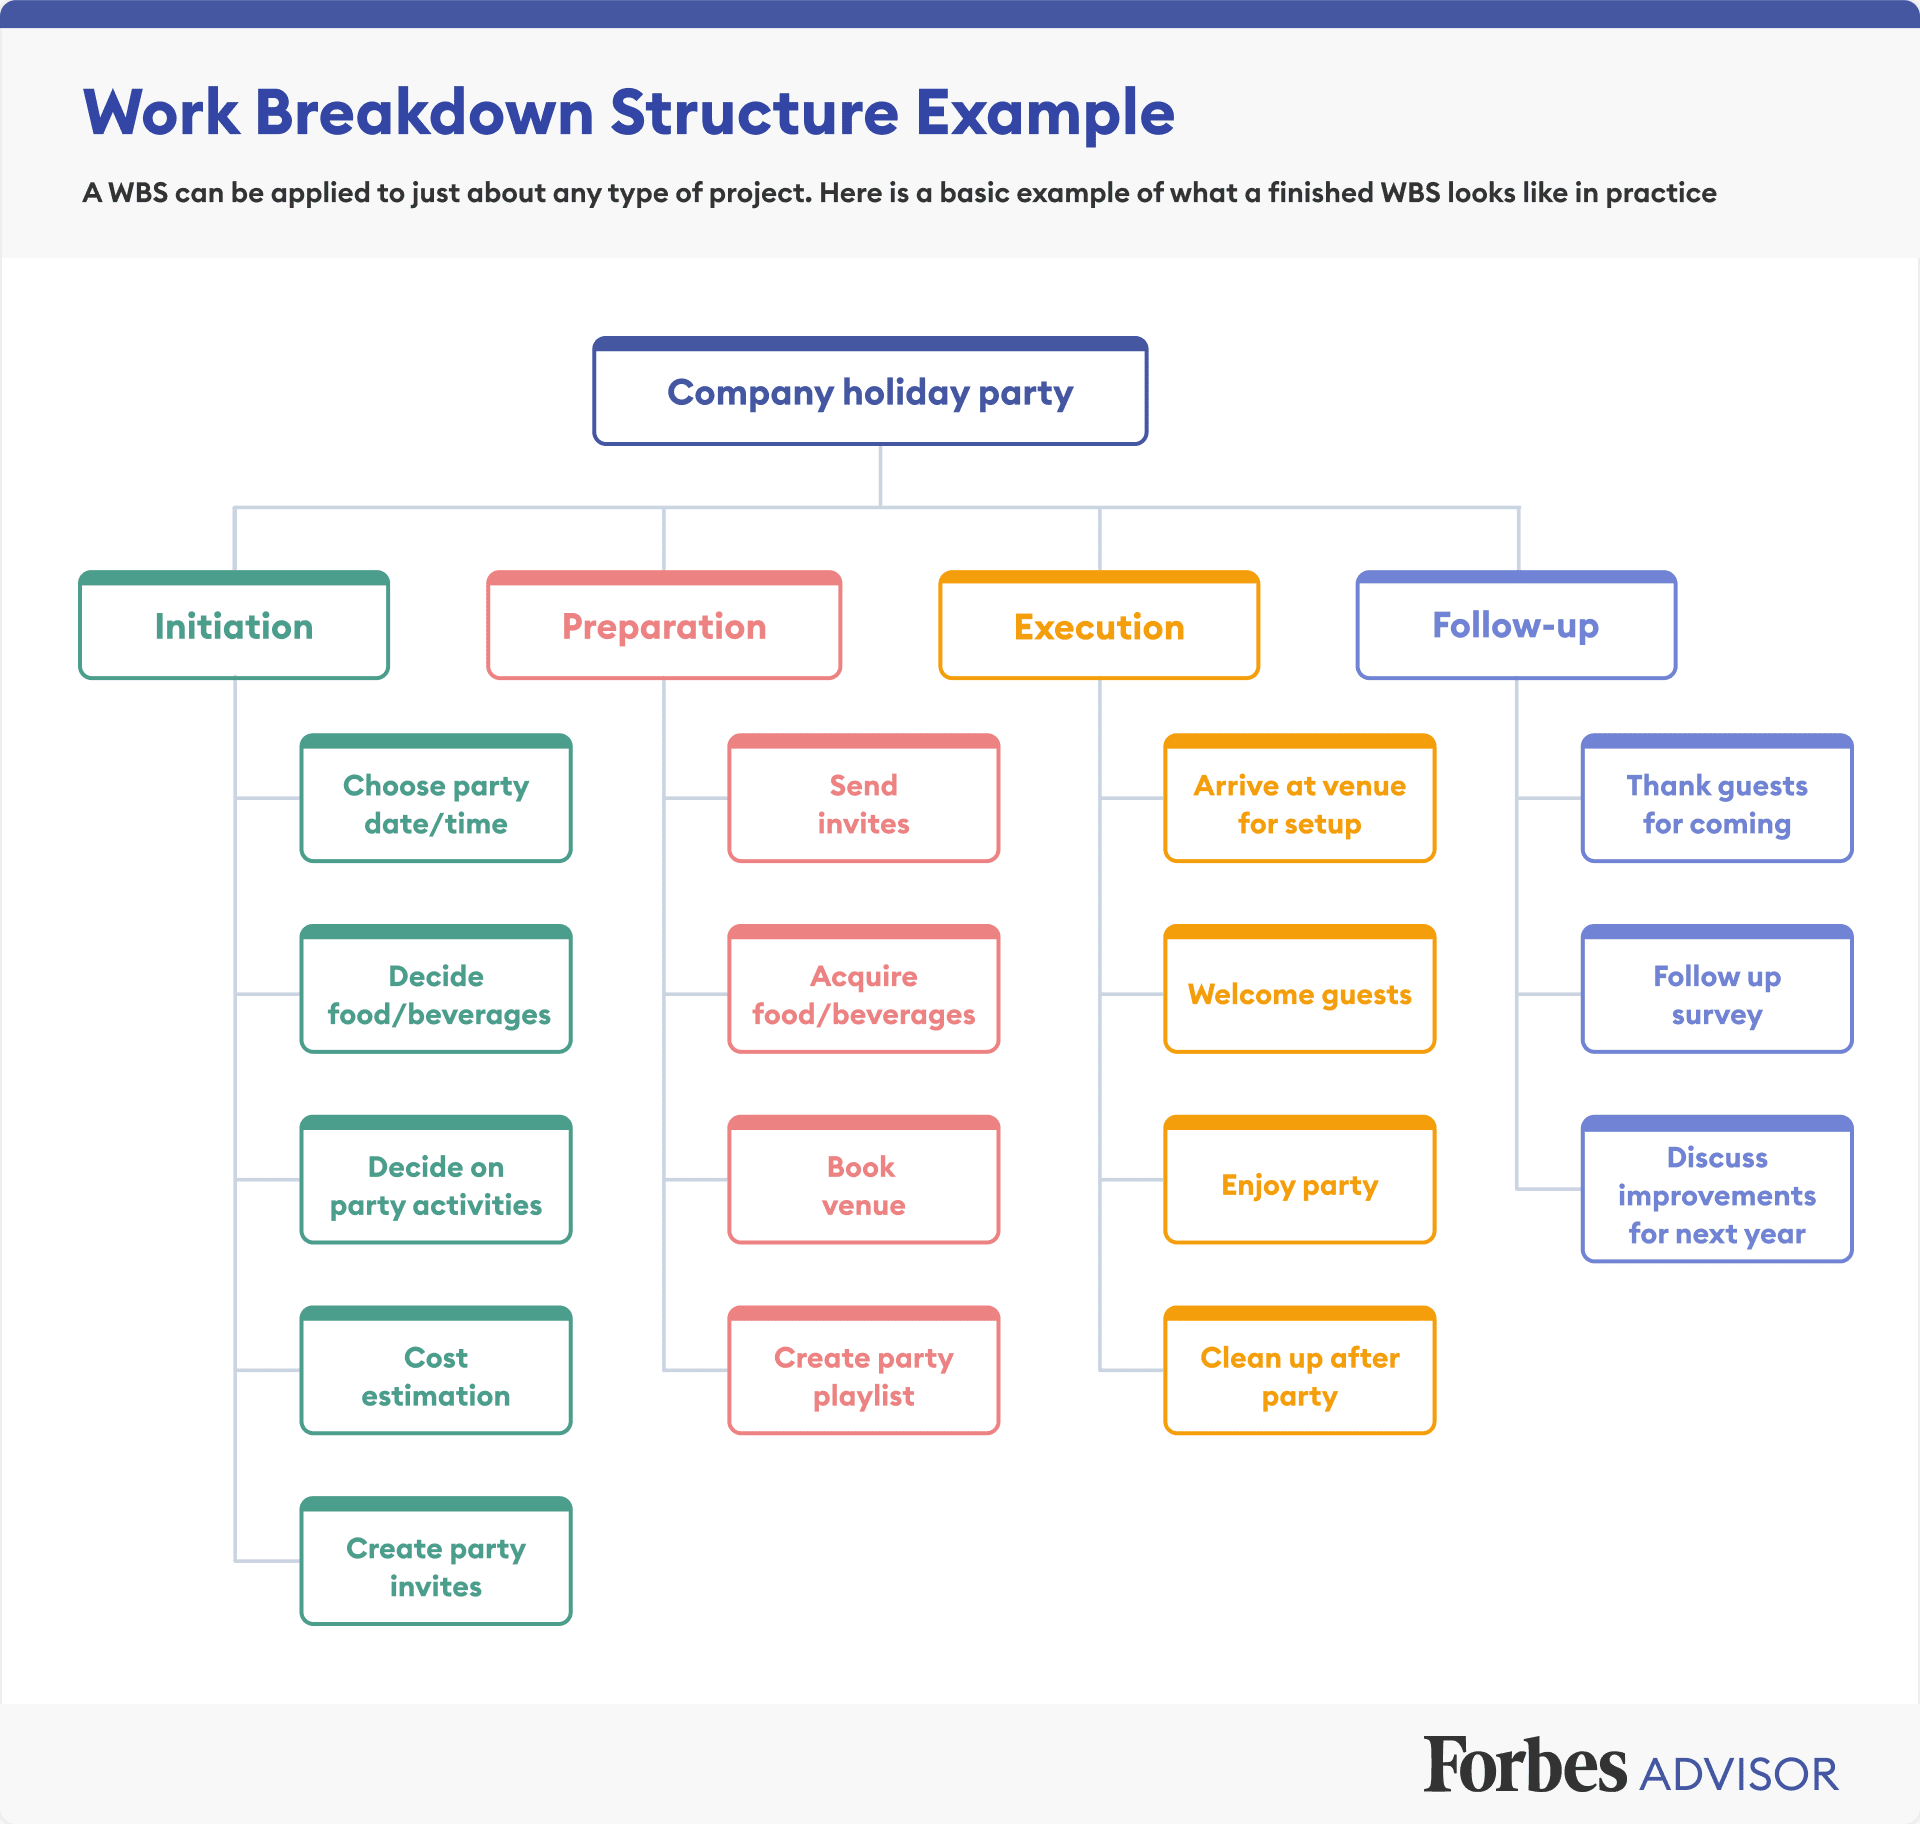 Forbes - Work Breakdown Structure